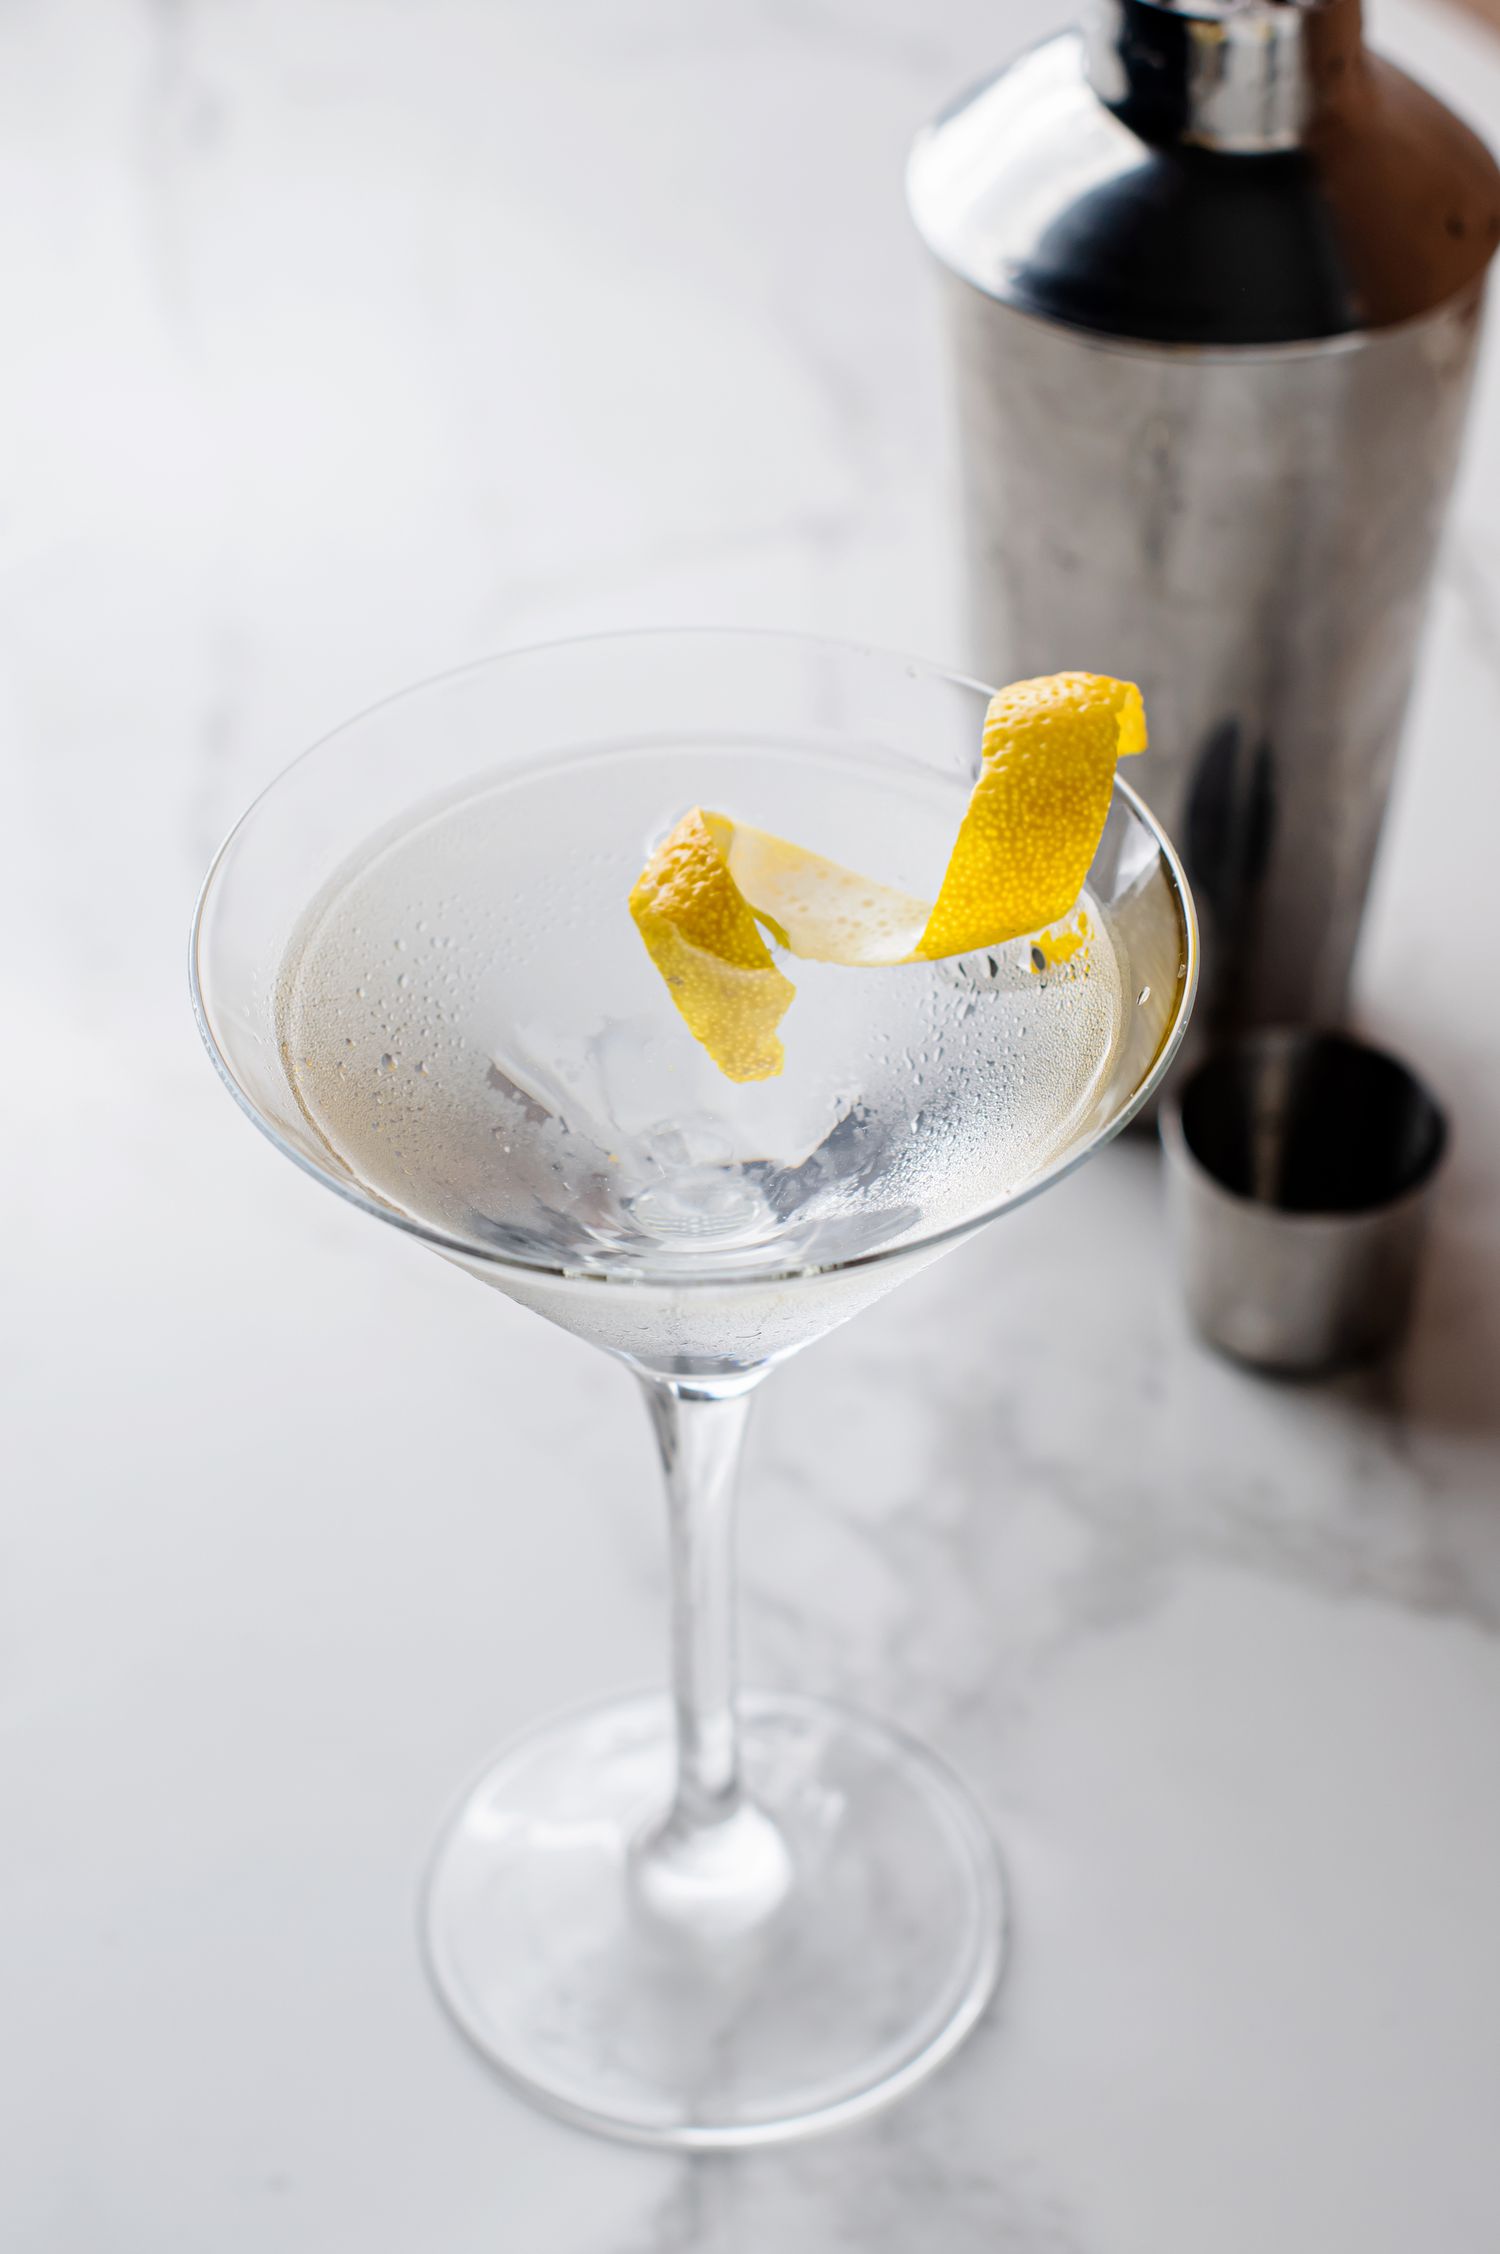 James Bond's Vesper martini with a lemon twist